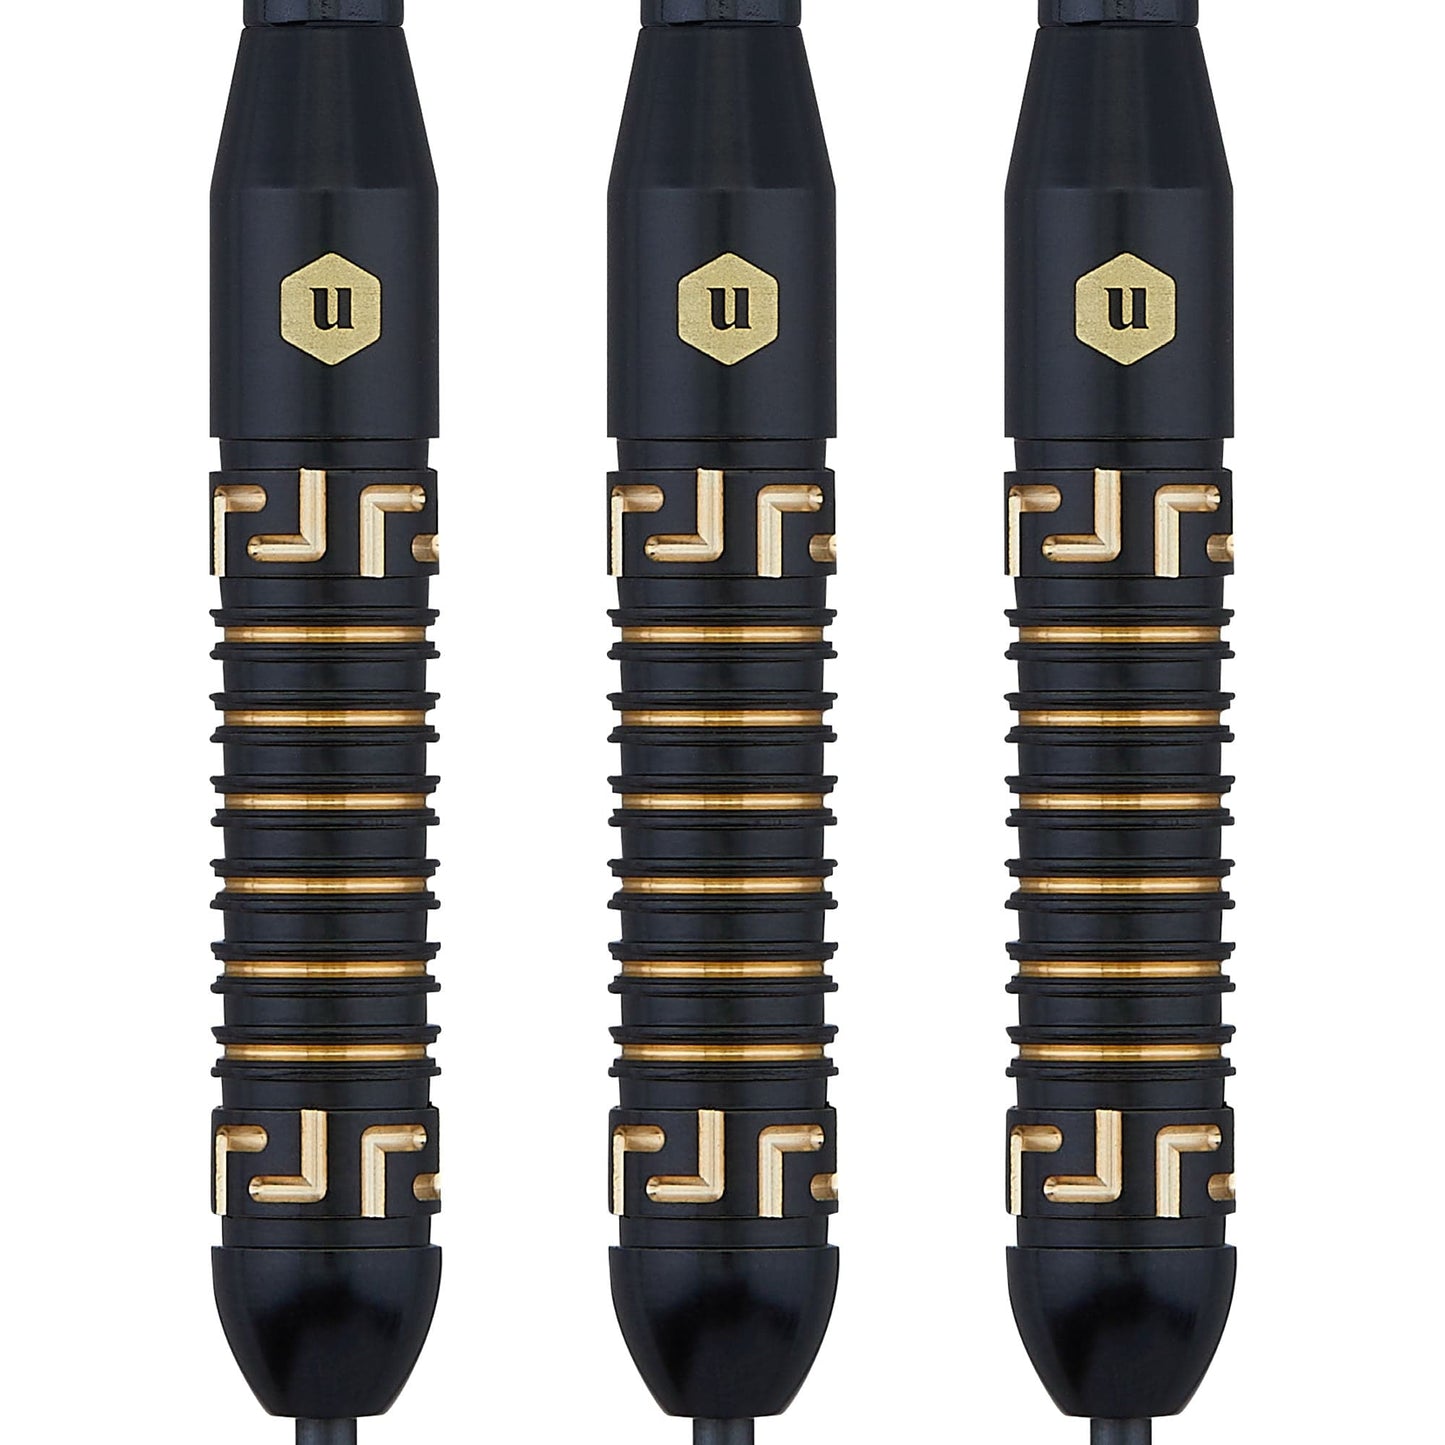 Unicorn Top Brass Darts - Steel Tip - Style 1 - Black & Gold 20g